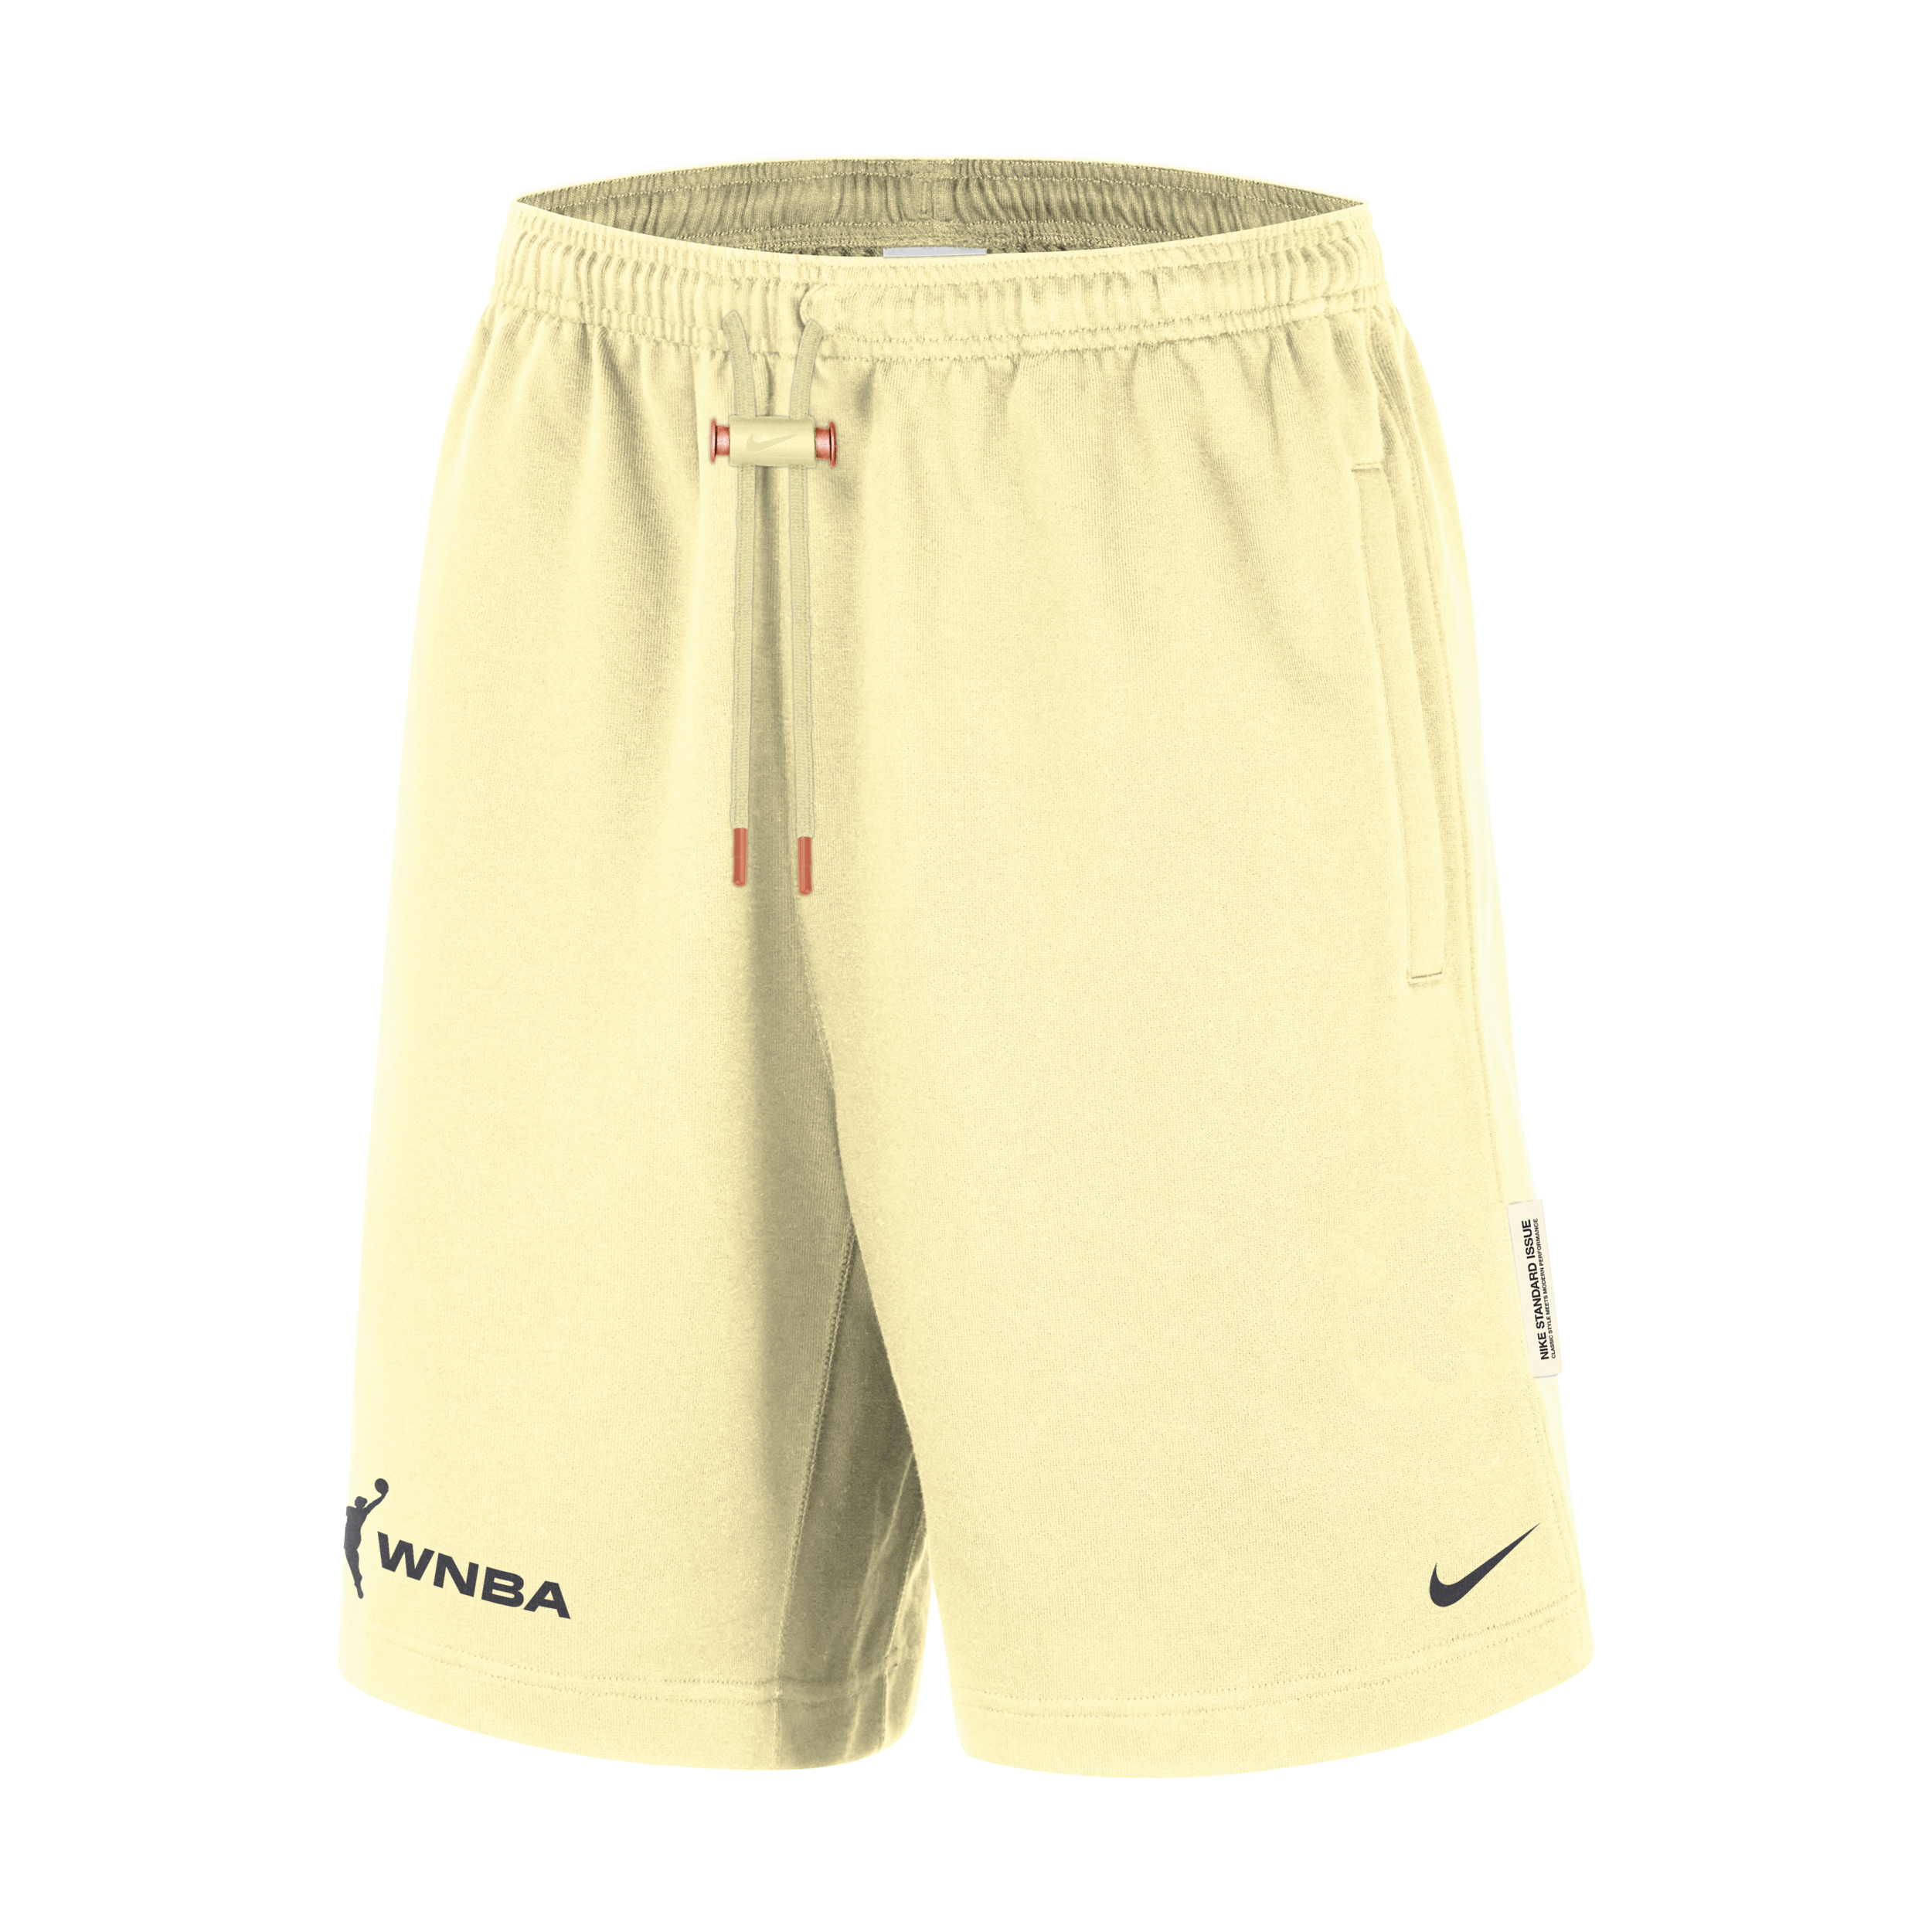 Nike Wnba Standard Issue  Men's Basketball Shorts In Yellow